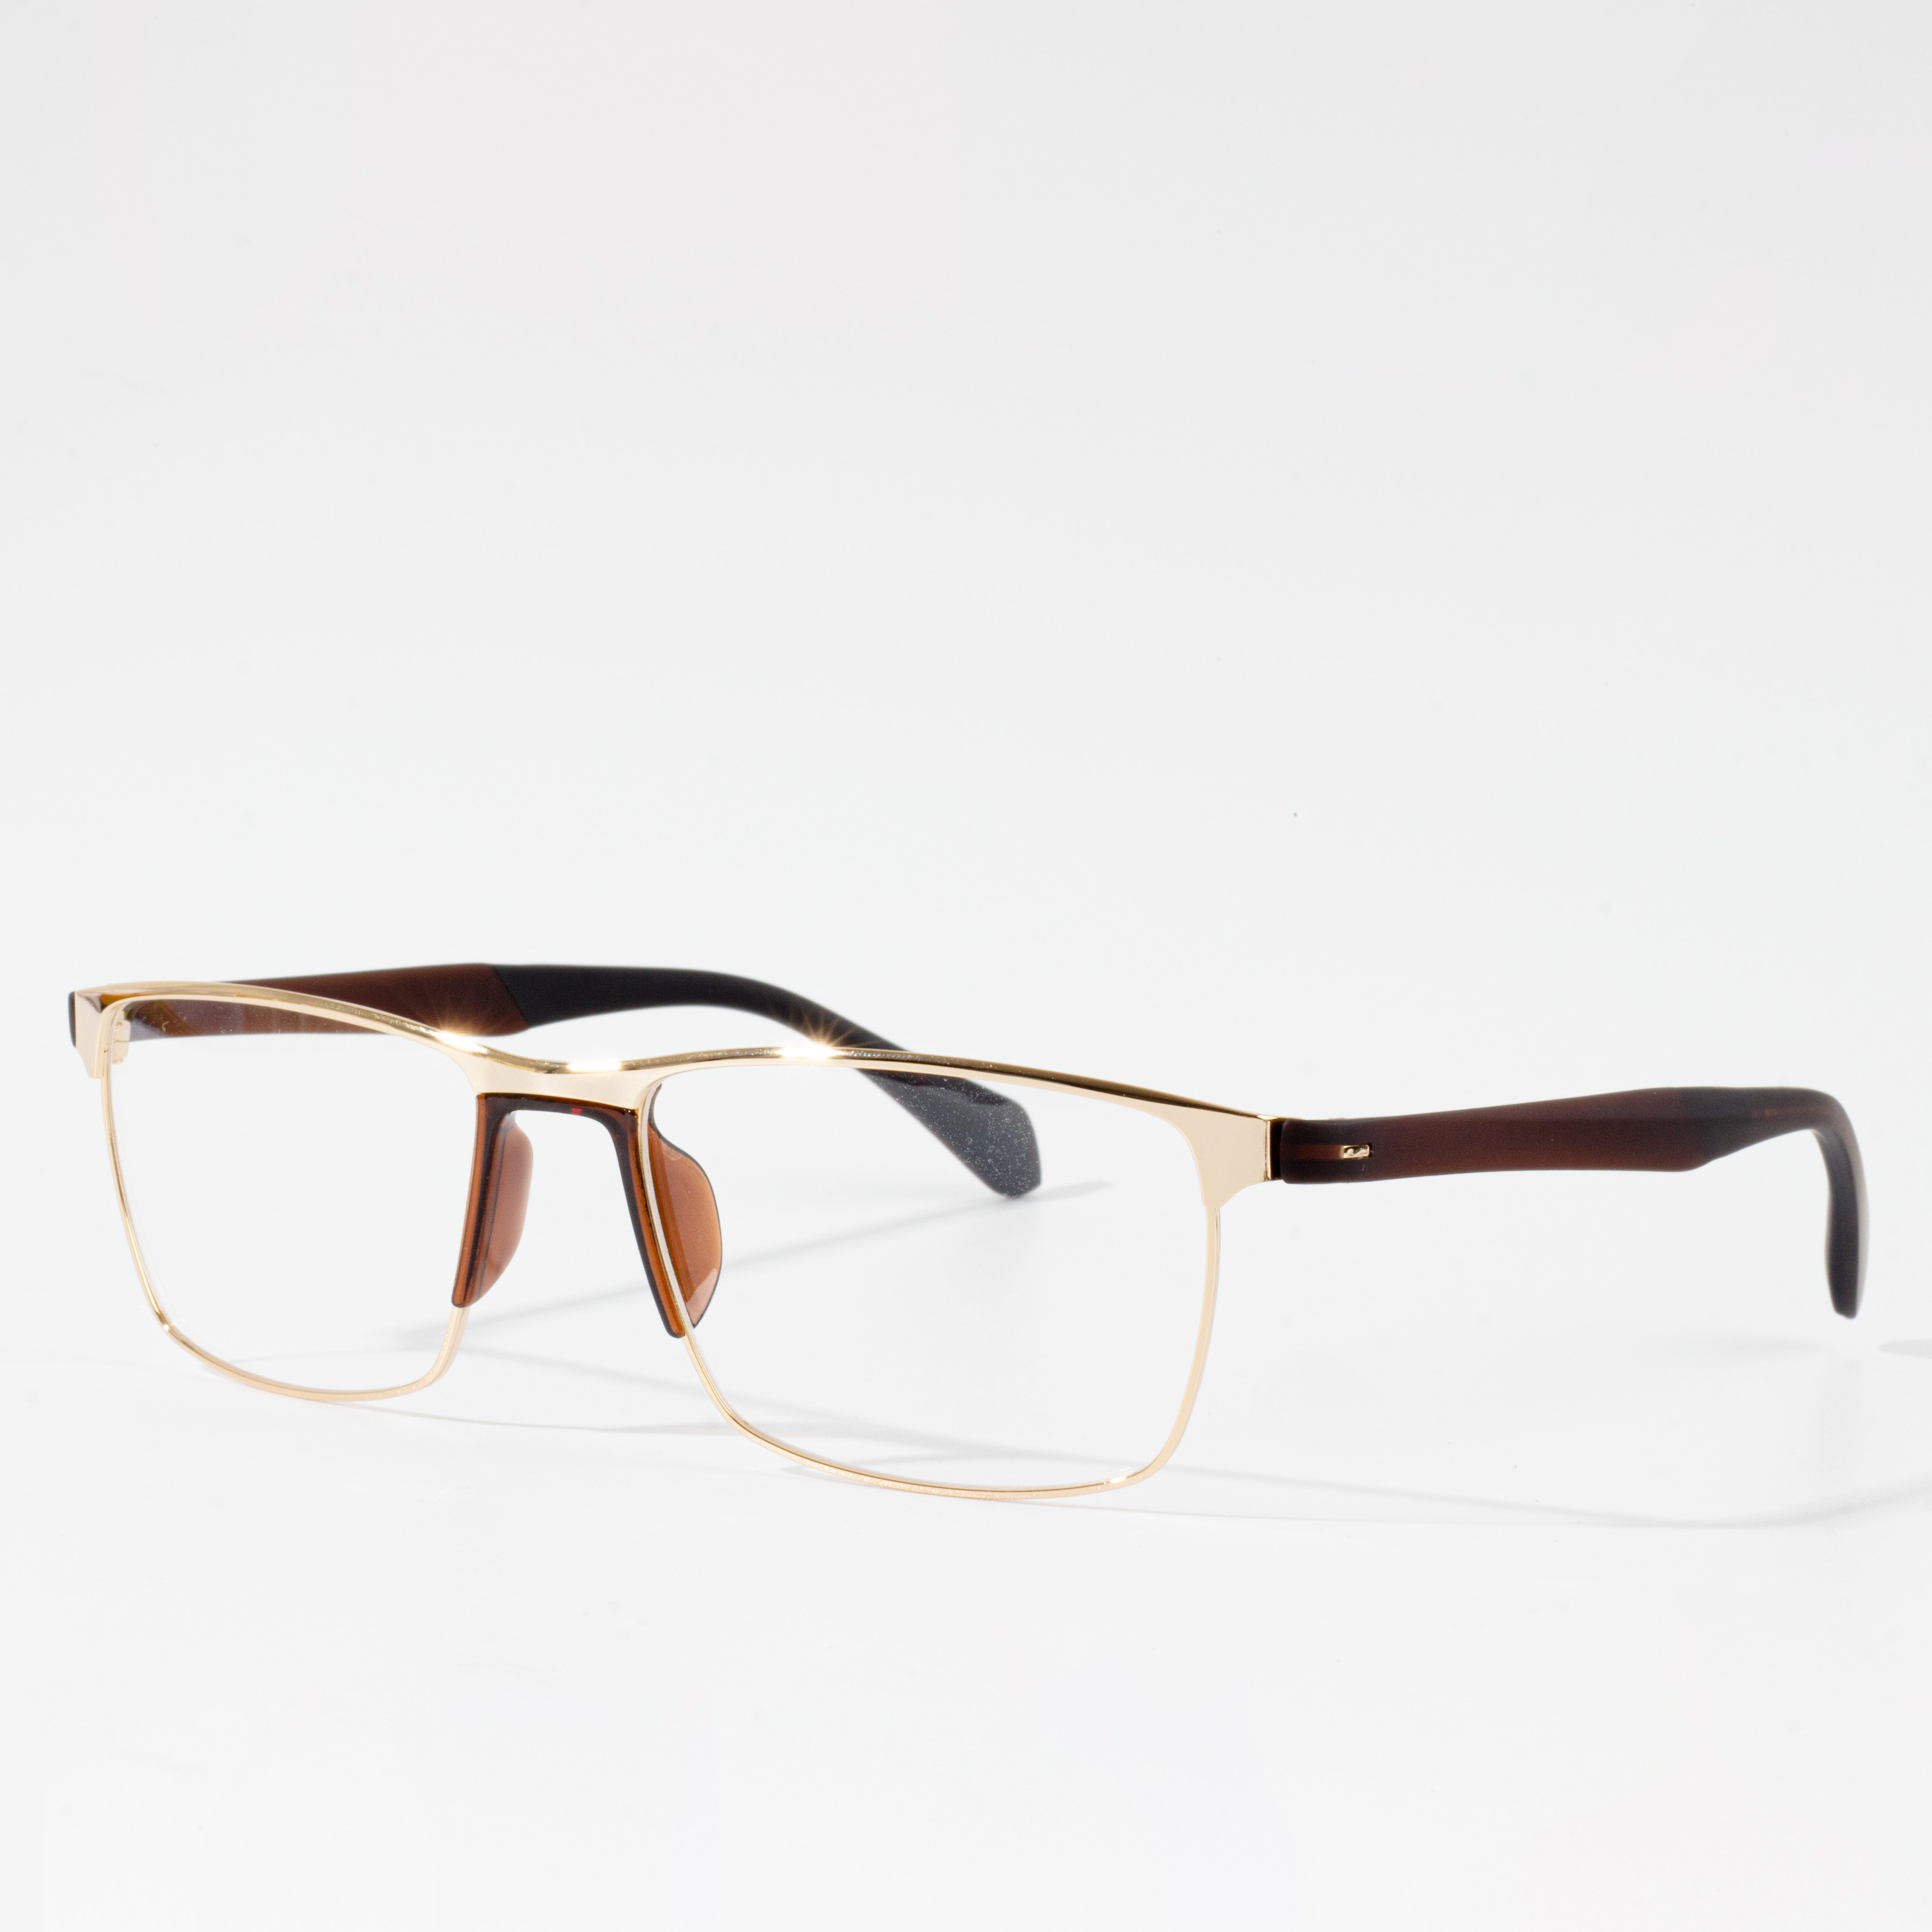 optical eyeglasses tr90 frame